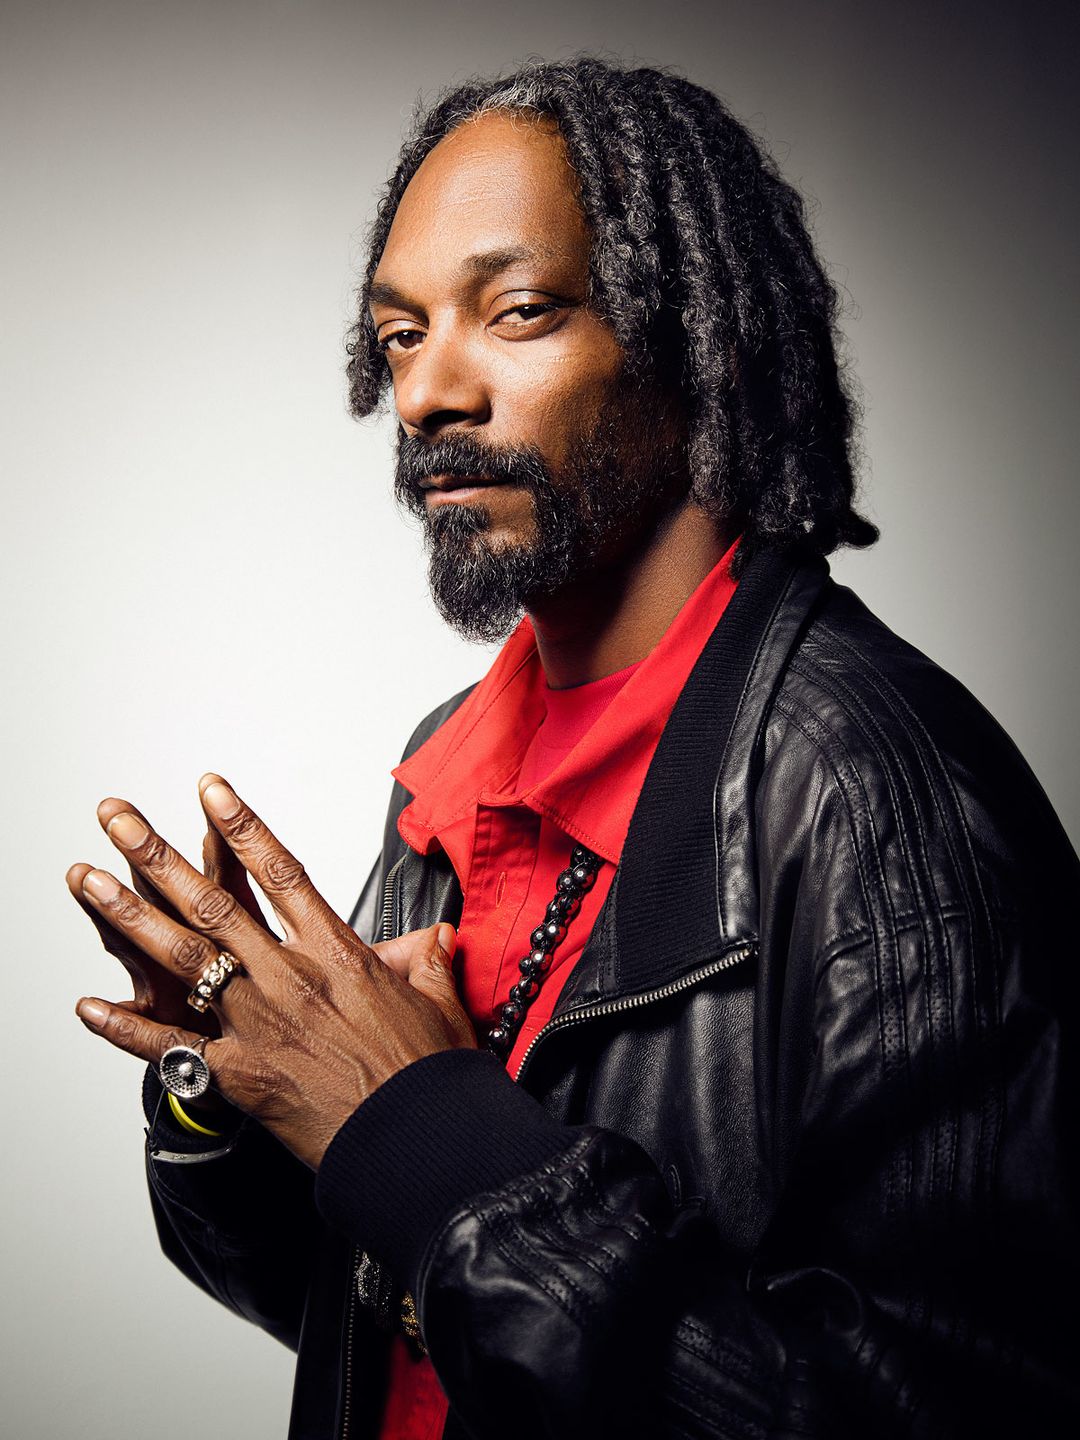 Snoop Dogg background